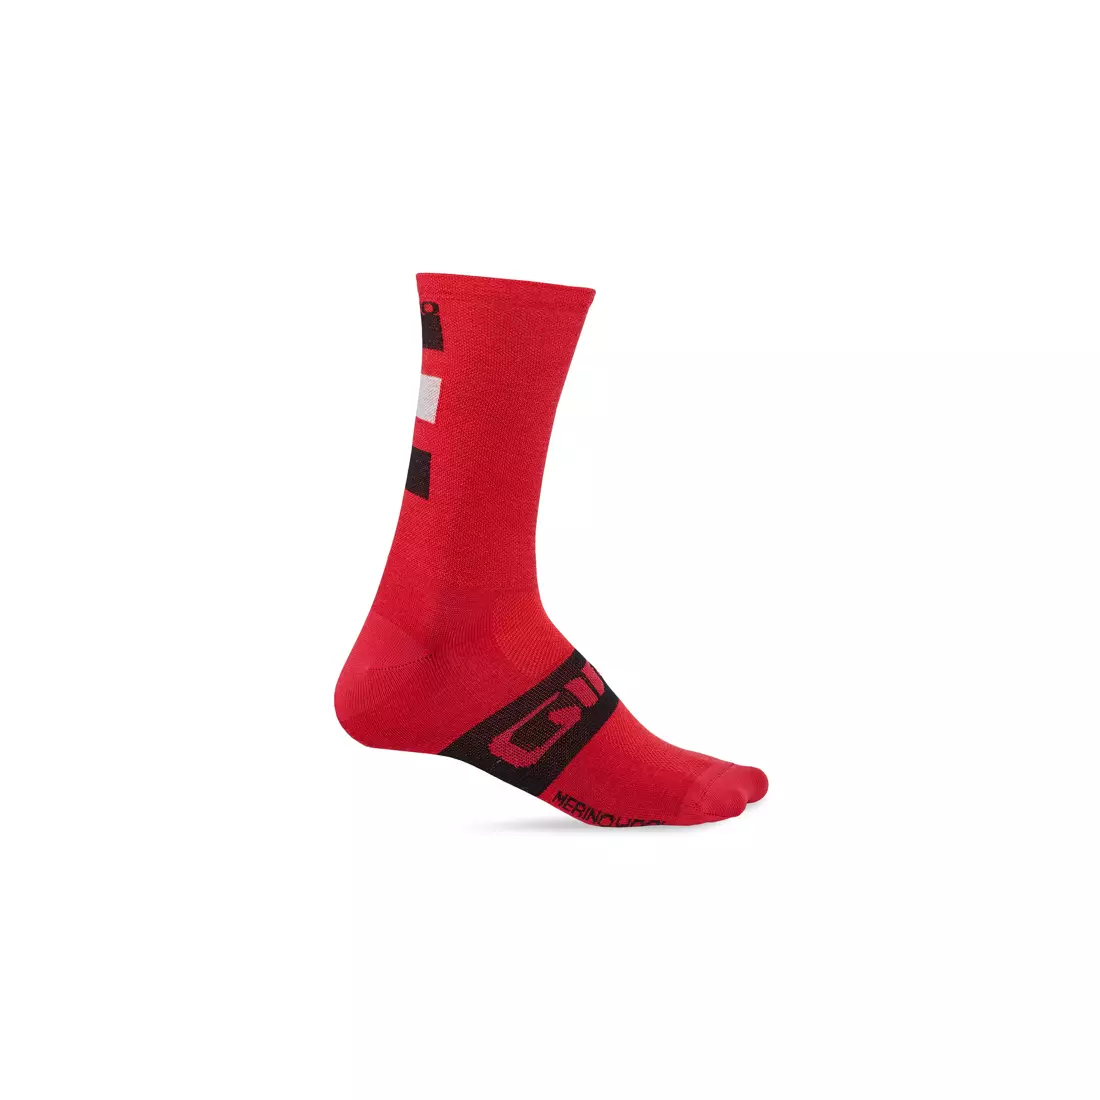 GIRO cycling socks seasonal merino wool dark red black grey GR-7085813